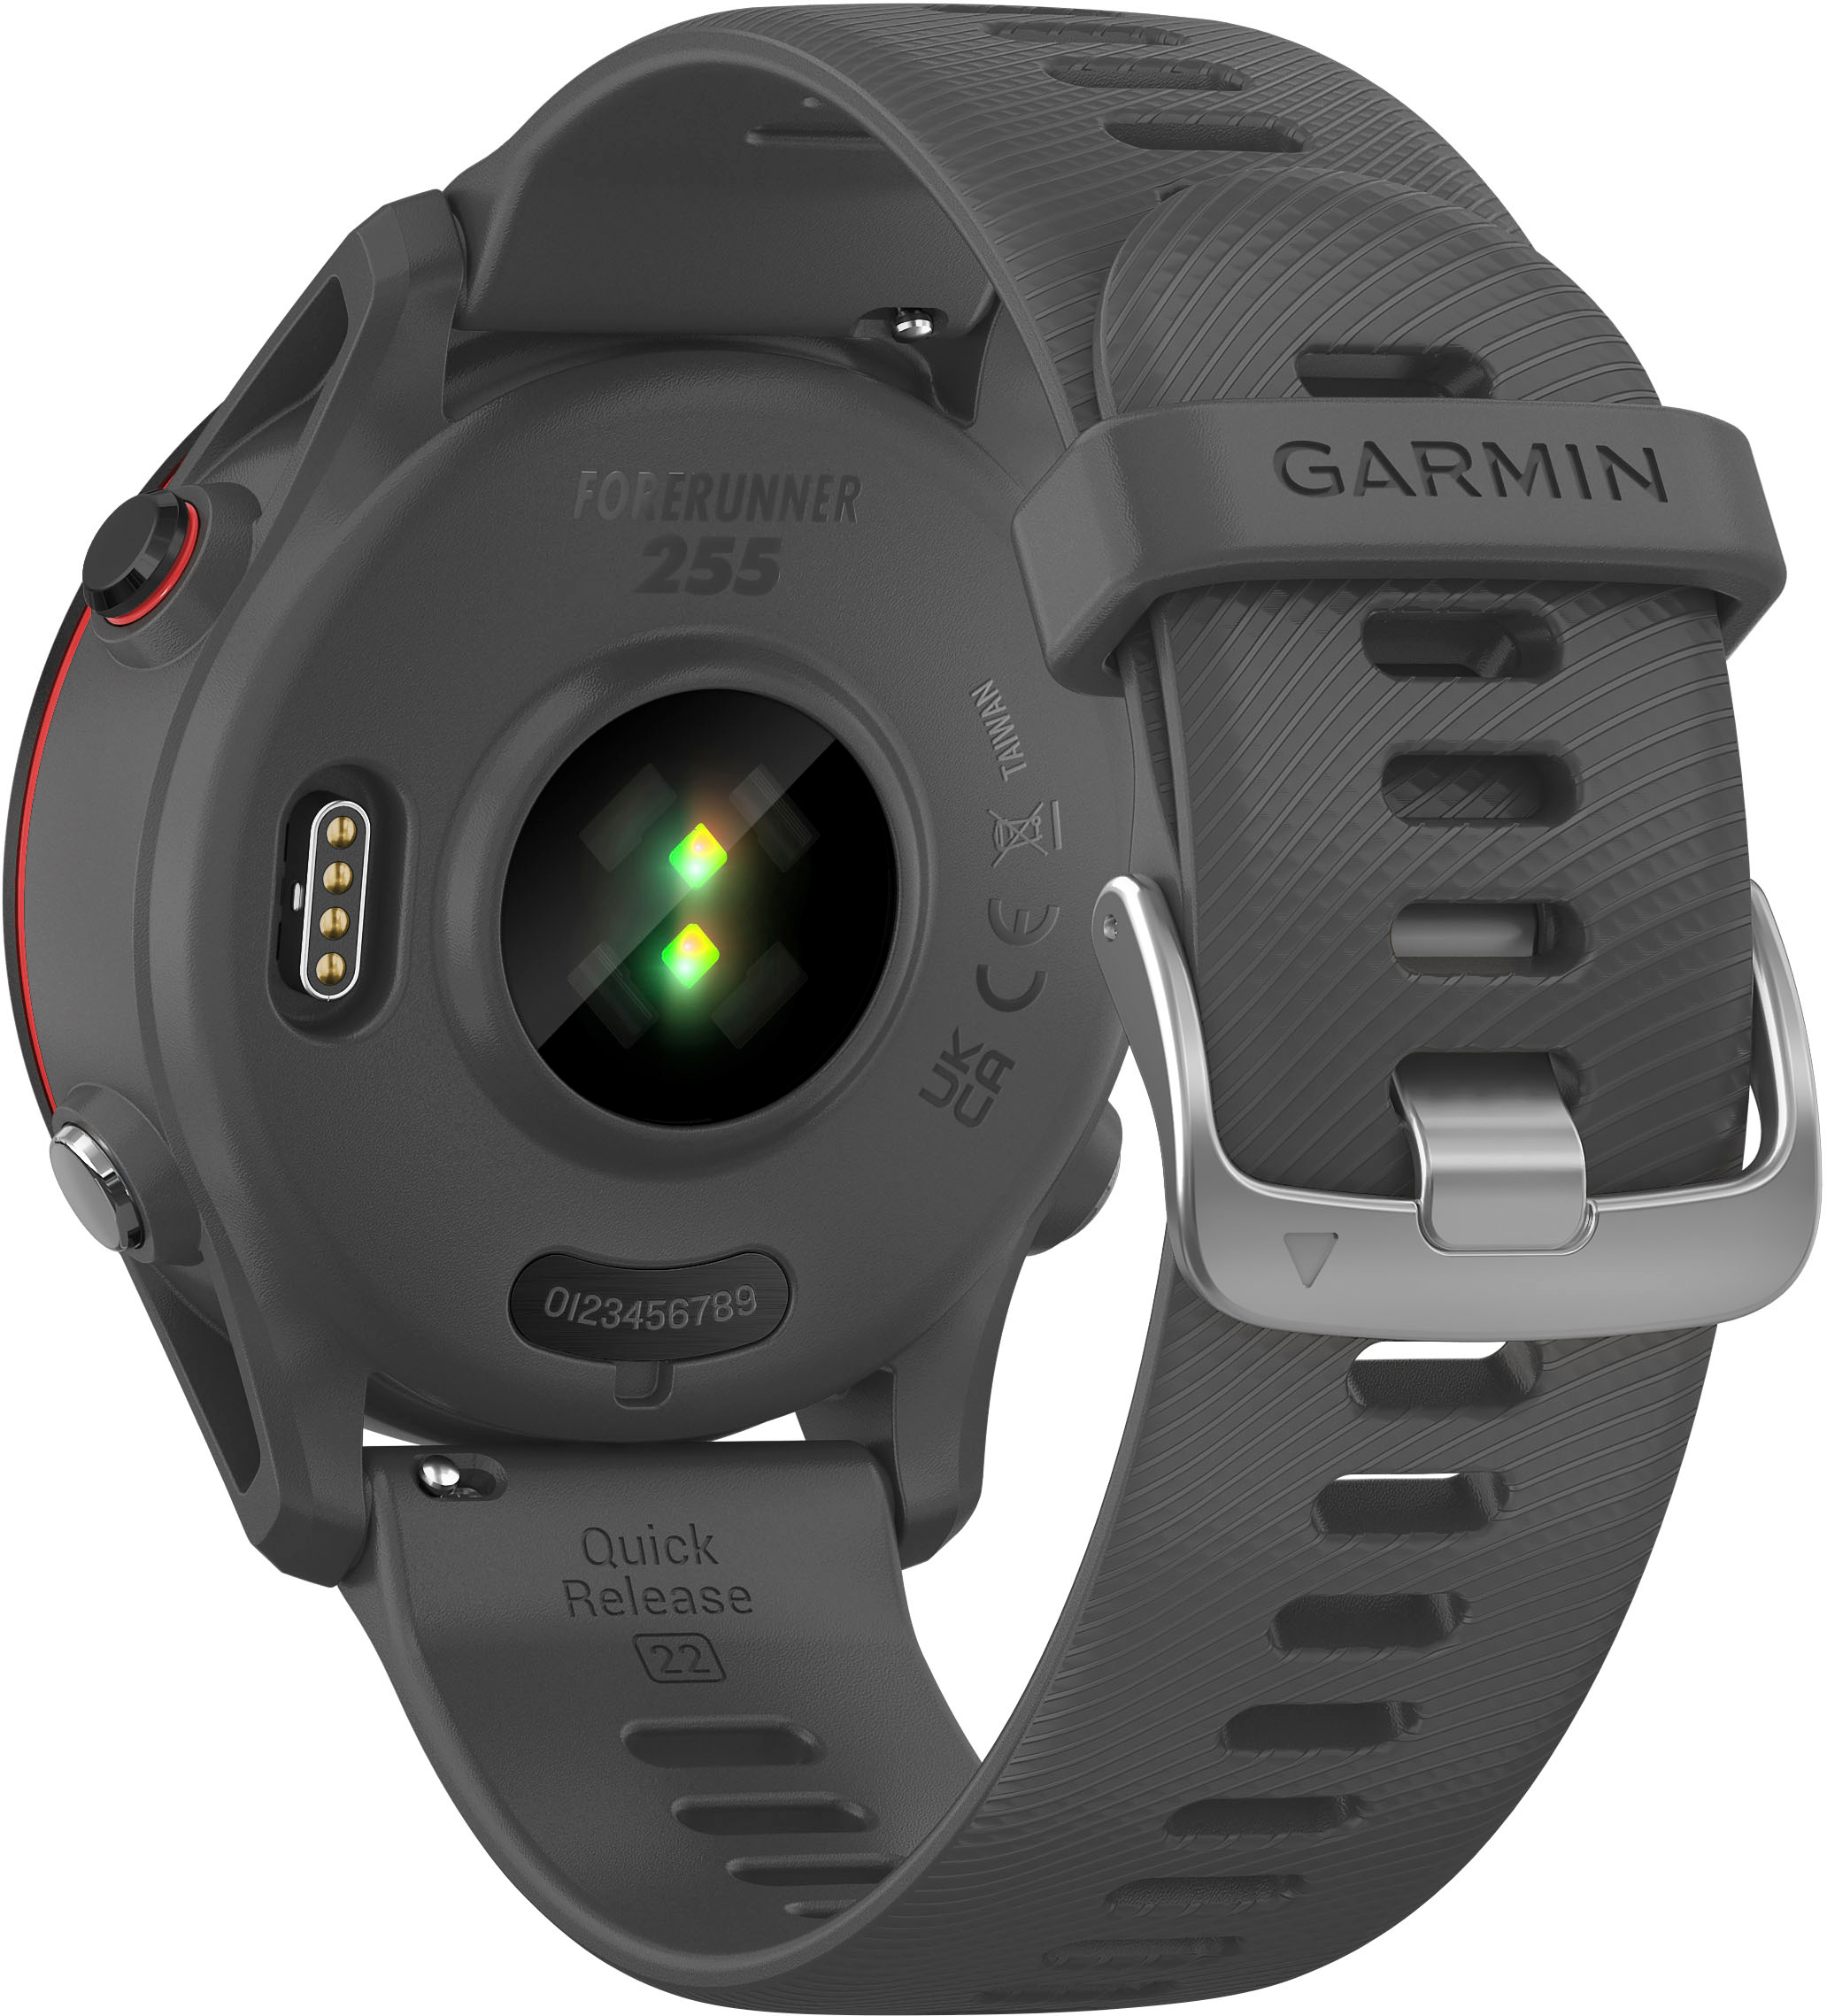 GARMIN-FORERUNNER 255 Unicolore - SFS195_Cardio et GPS